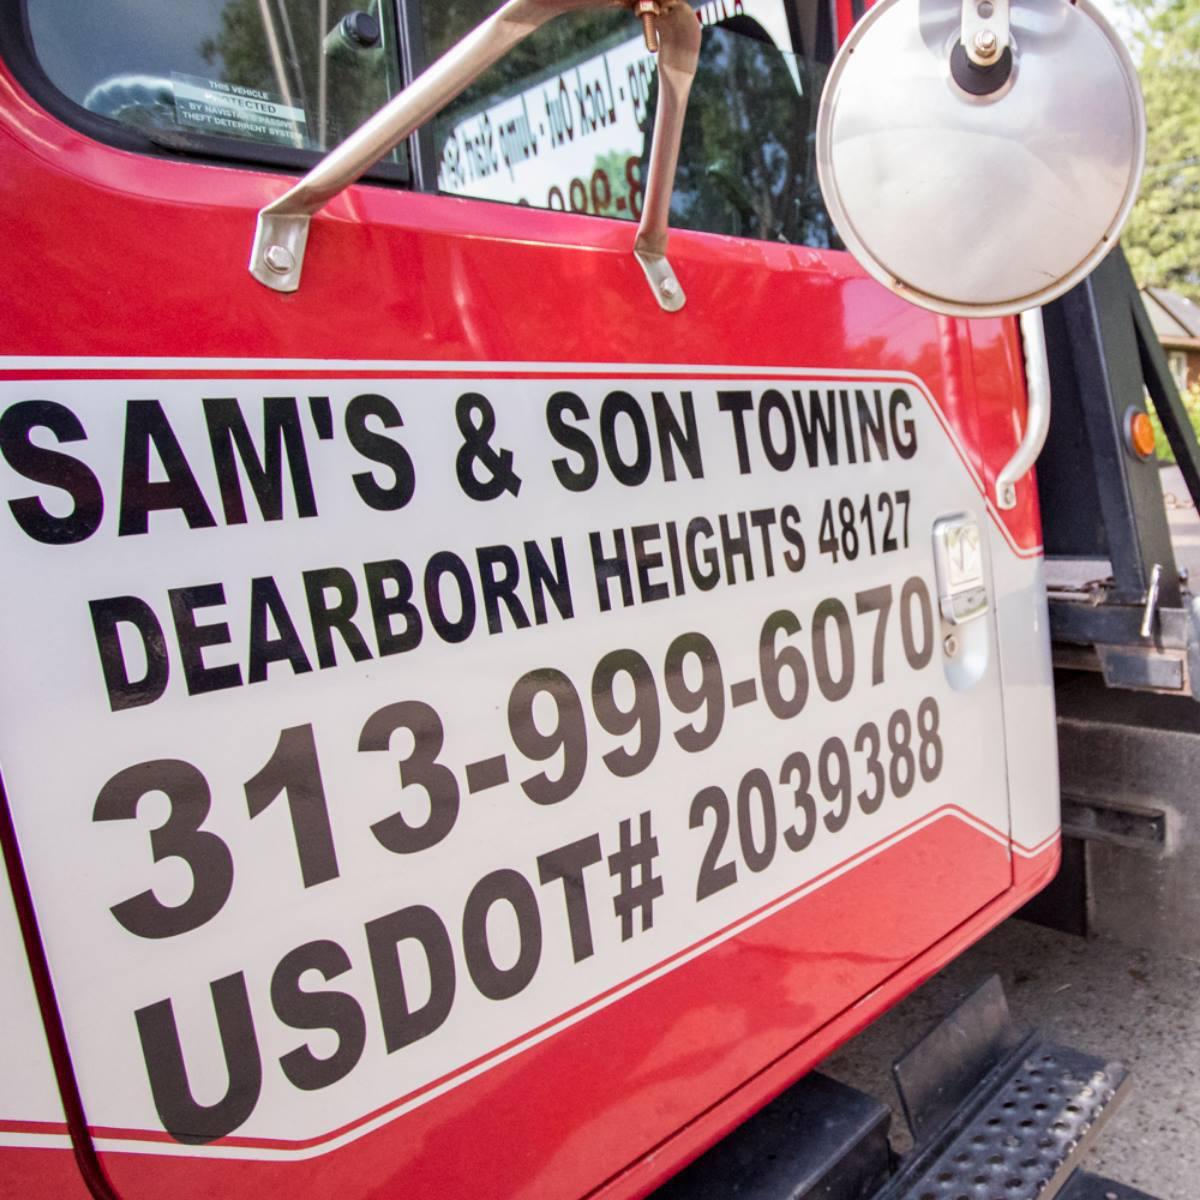 Sam's N Son 24 Hour Towing & Auto Repair - Dearborn Heights, MI 48125 - (313)999-6070 | ShowMeLocal.com